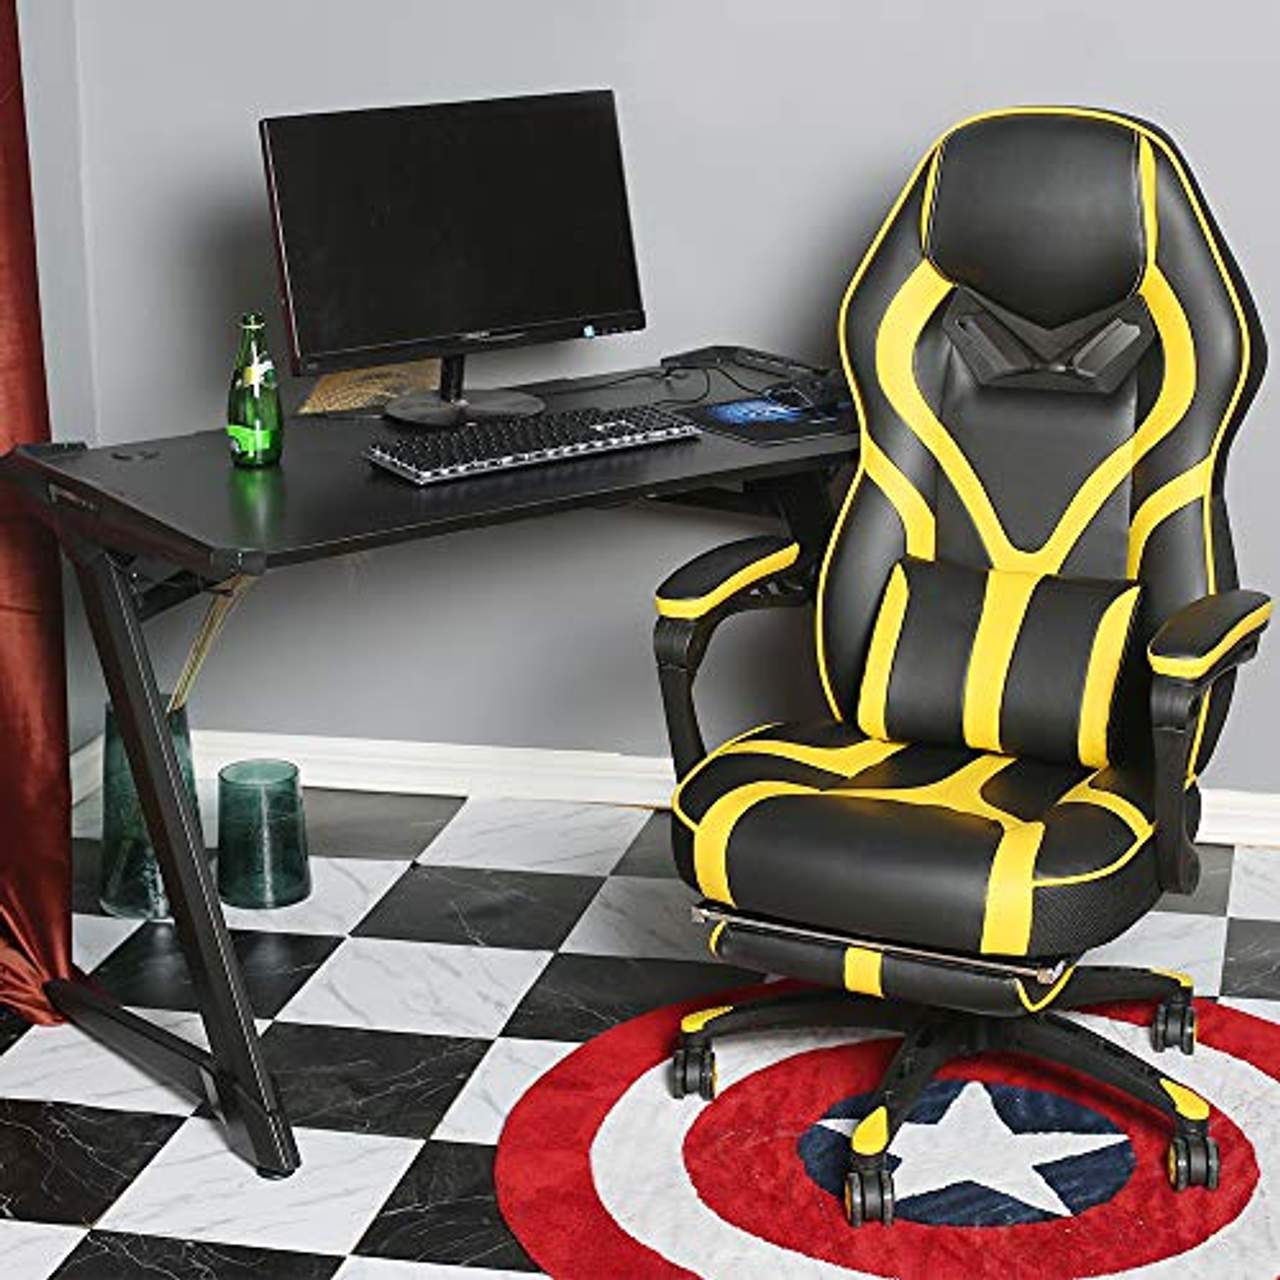 Gaming Stuhl Racing Recliner Bürostuhl- Ergonomischer höhenverstellbarer